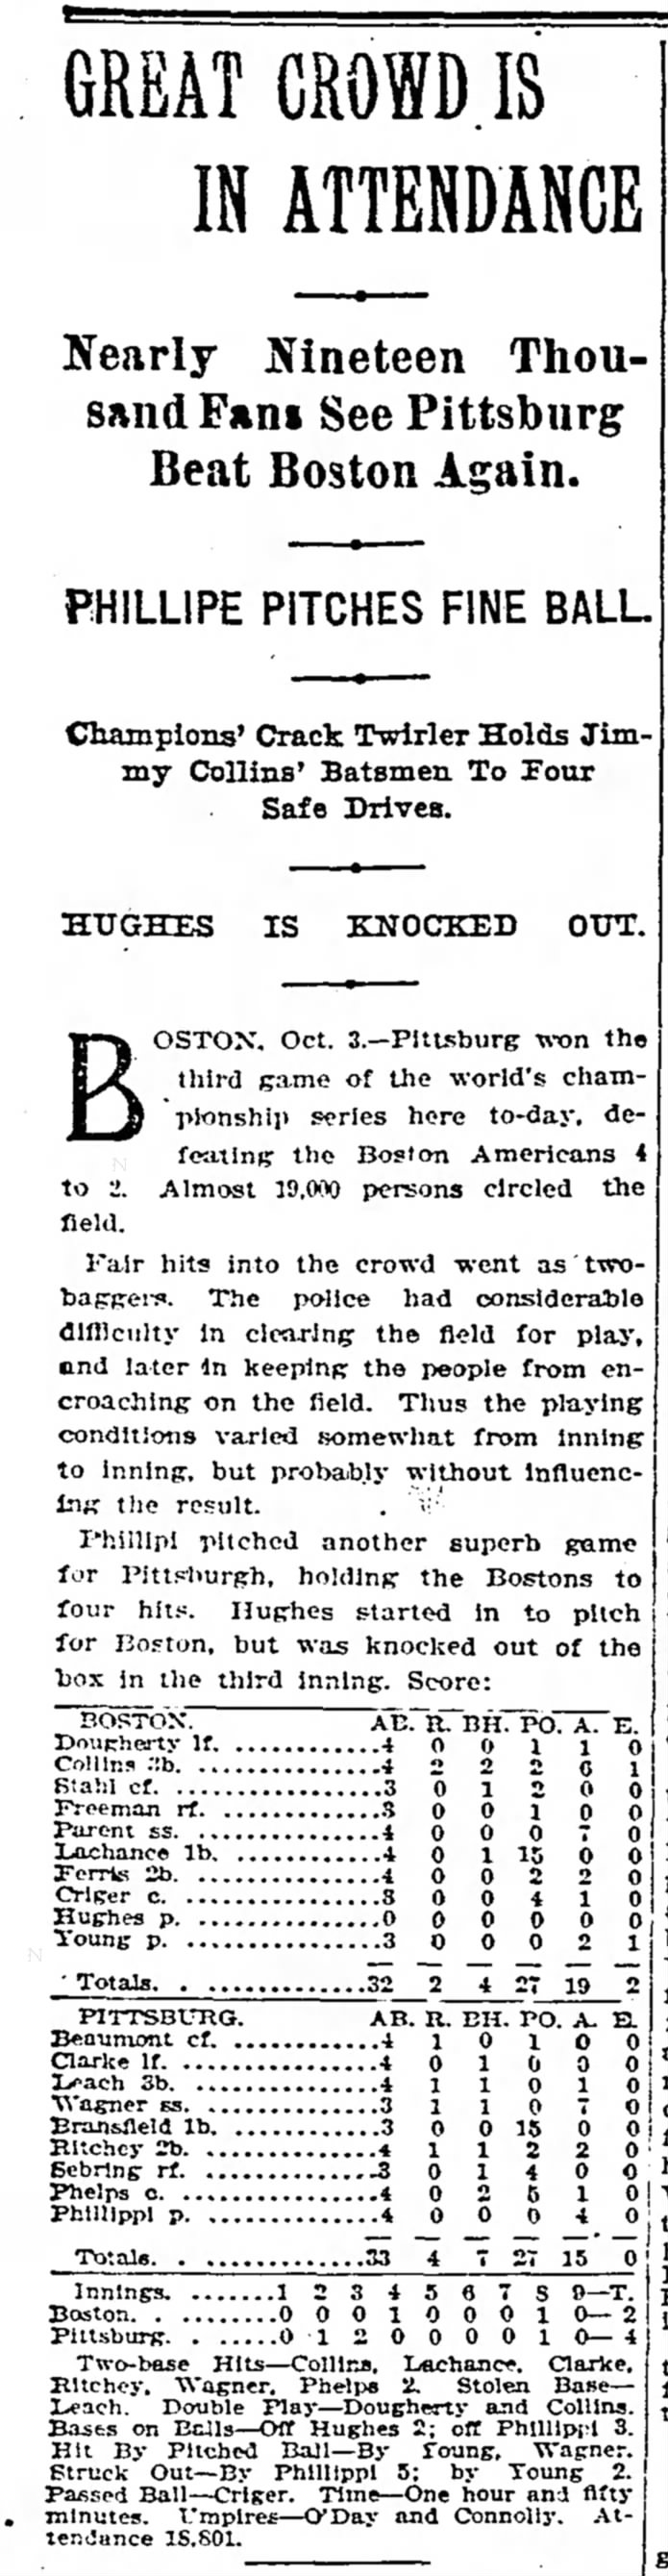 1903 World Series game 3